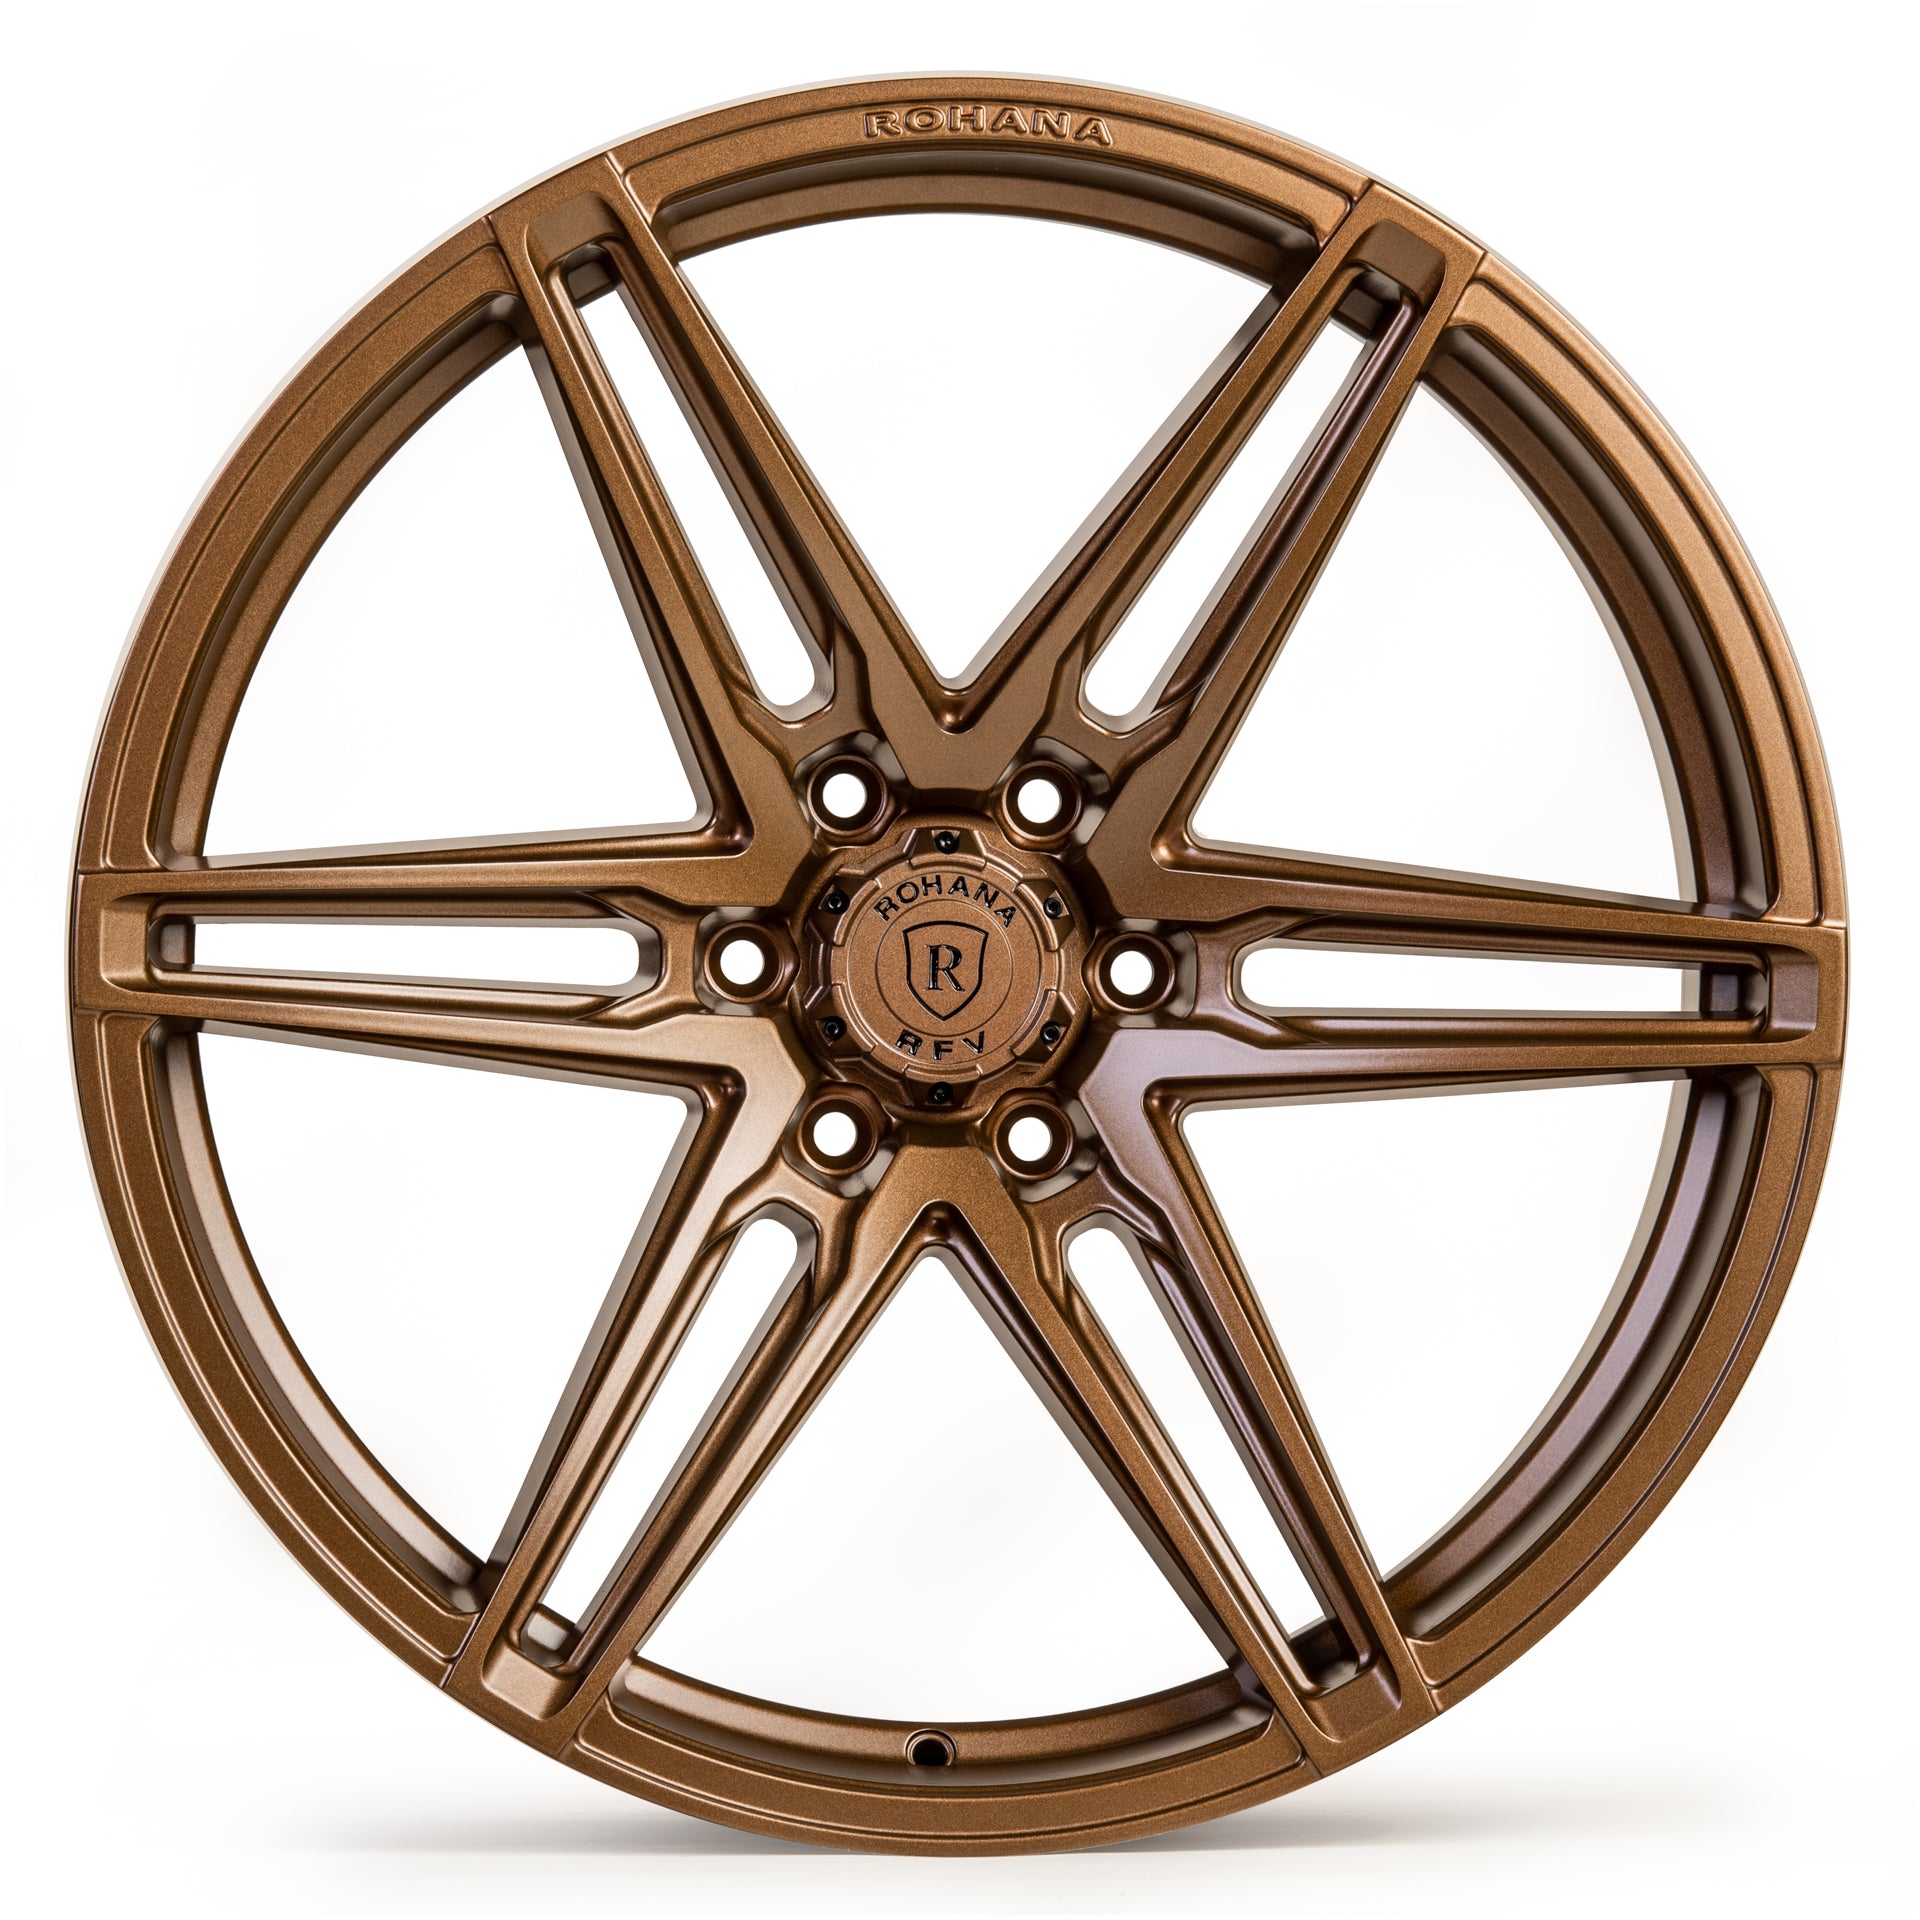 20" Rohana RFV1 Wheels - Set of 4 - Concave Rotary Forged - Motorsports LA